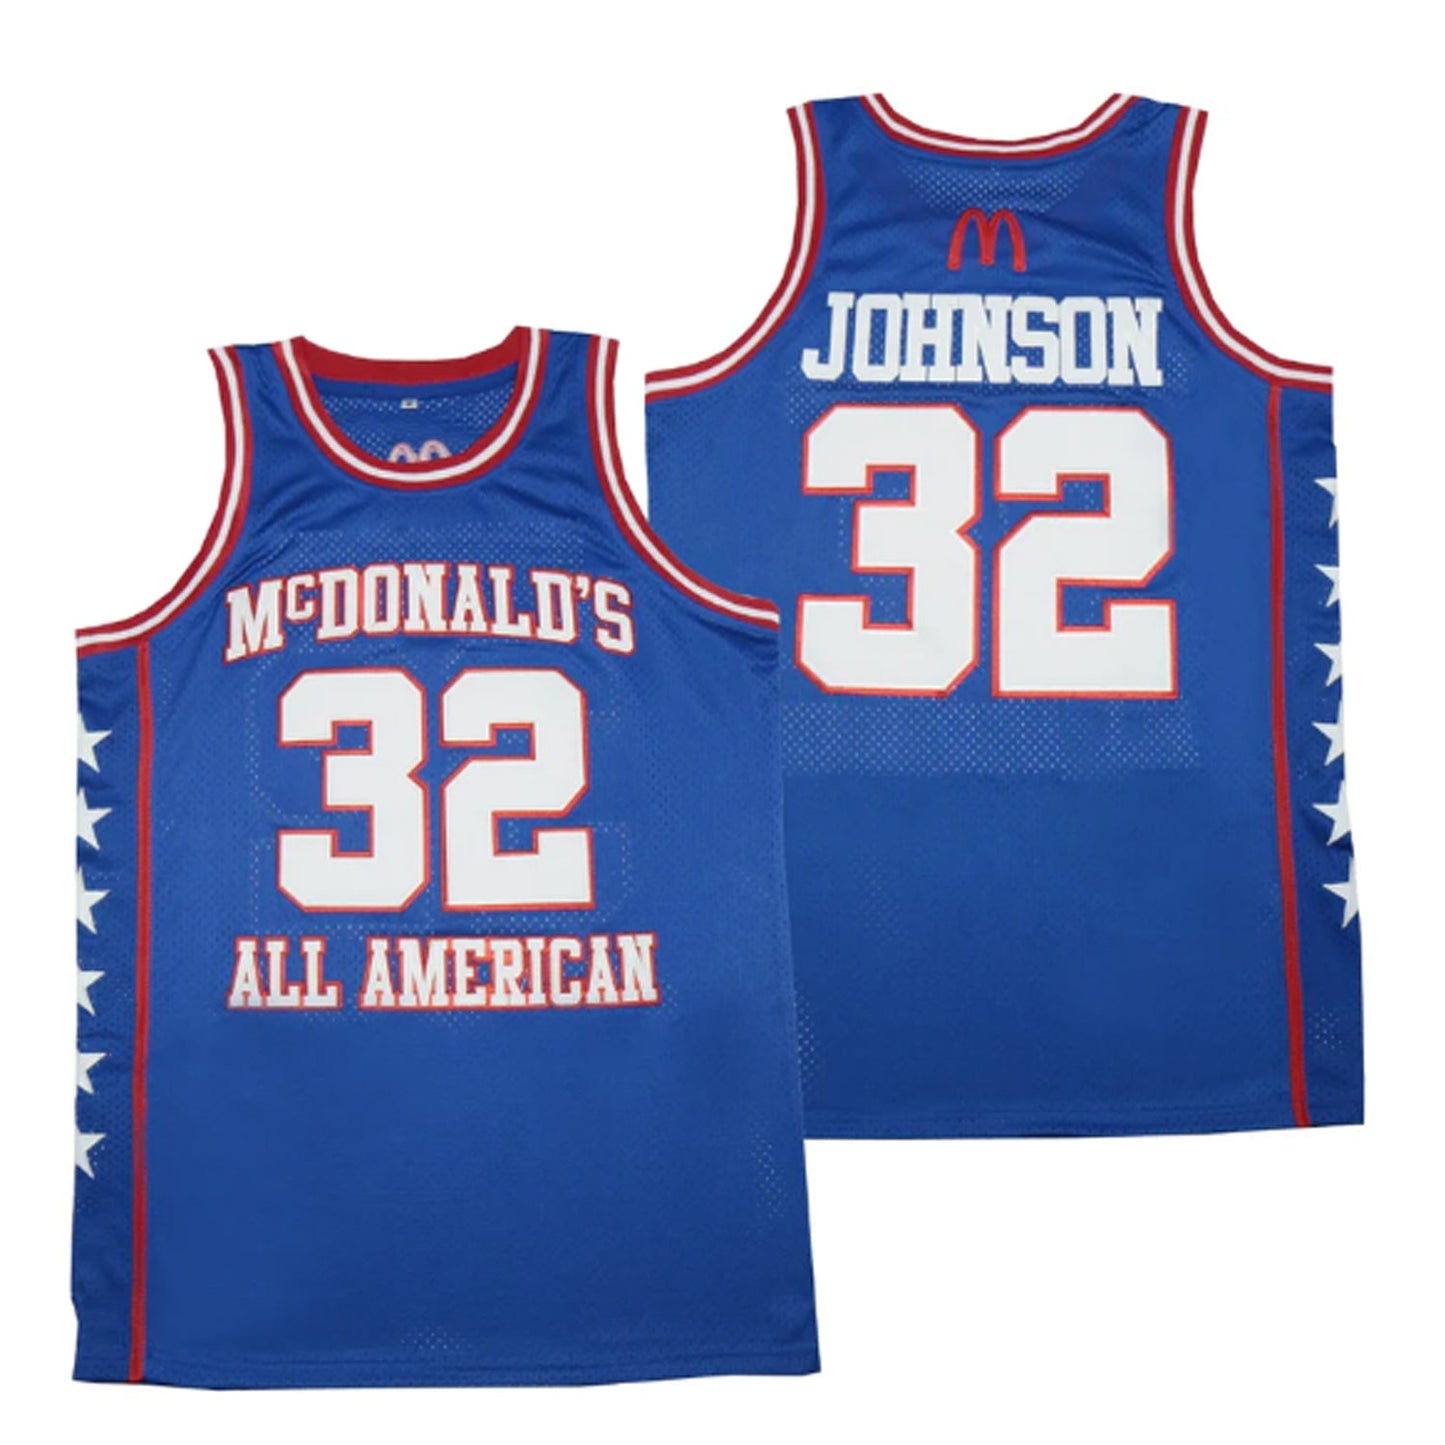 Magic Johnson All-American 32 Jersey